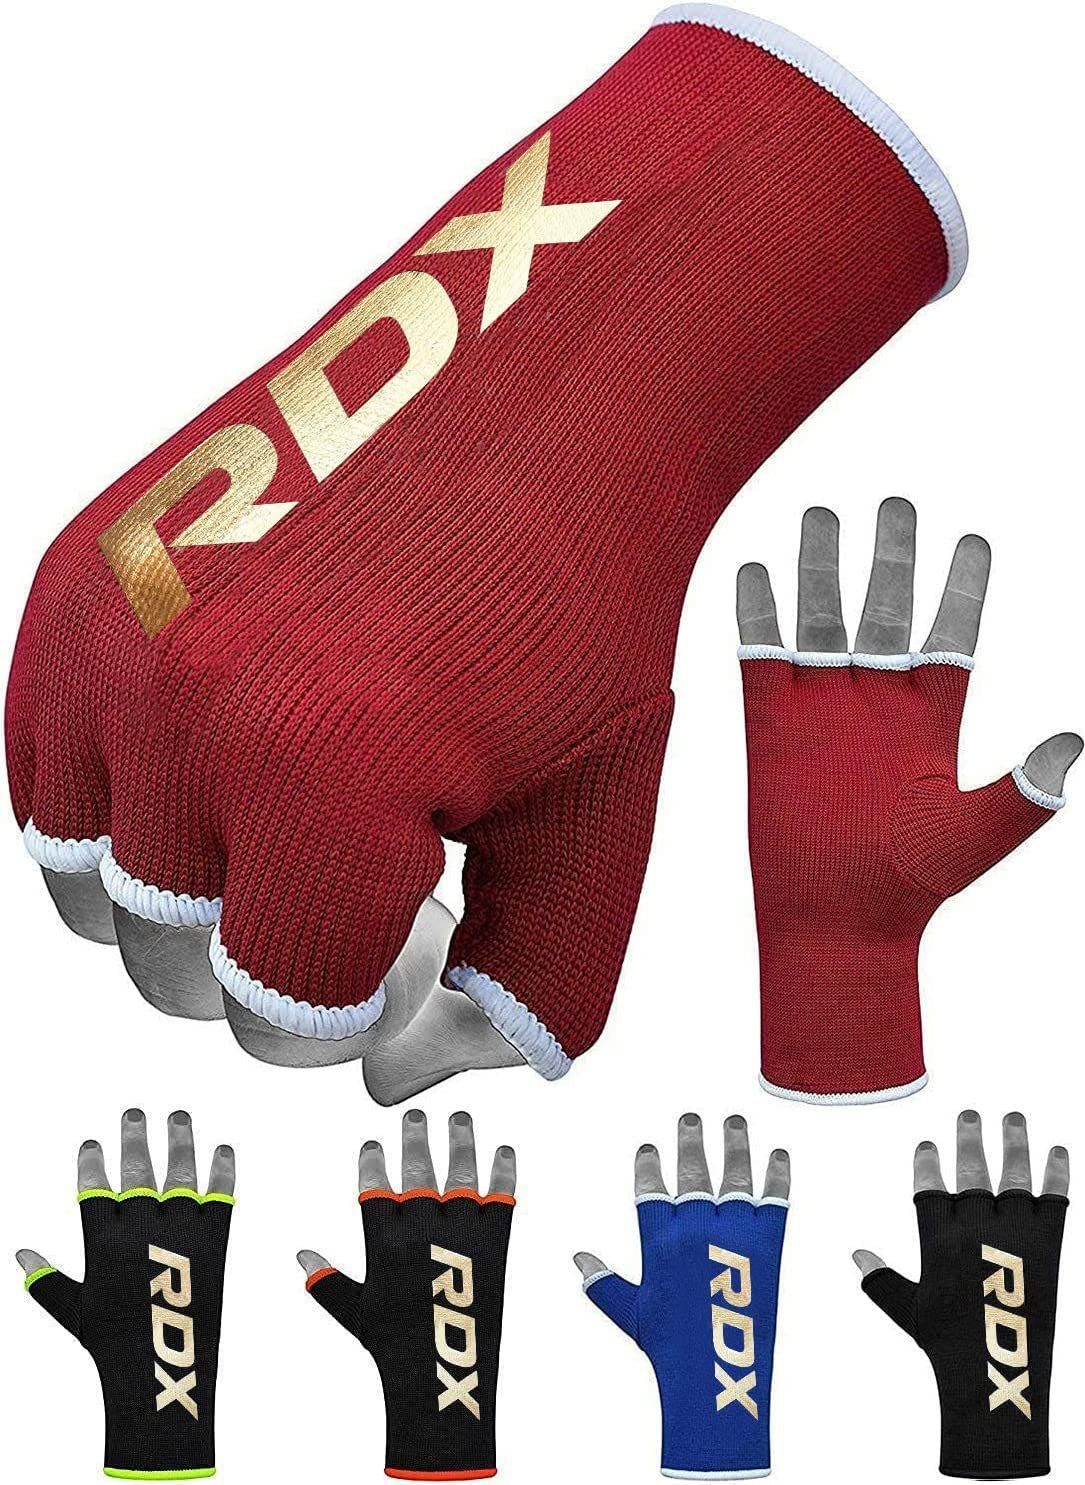 RDX Sports Boxbandagen RDX Boxen Innere Boxbandagen Handschuhe Hand Wraps Training, RED Sparring